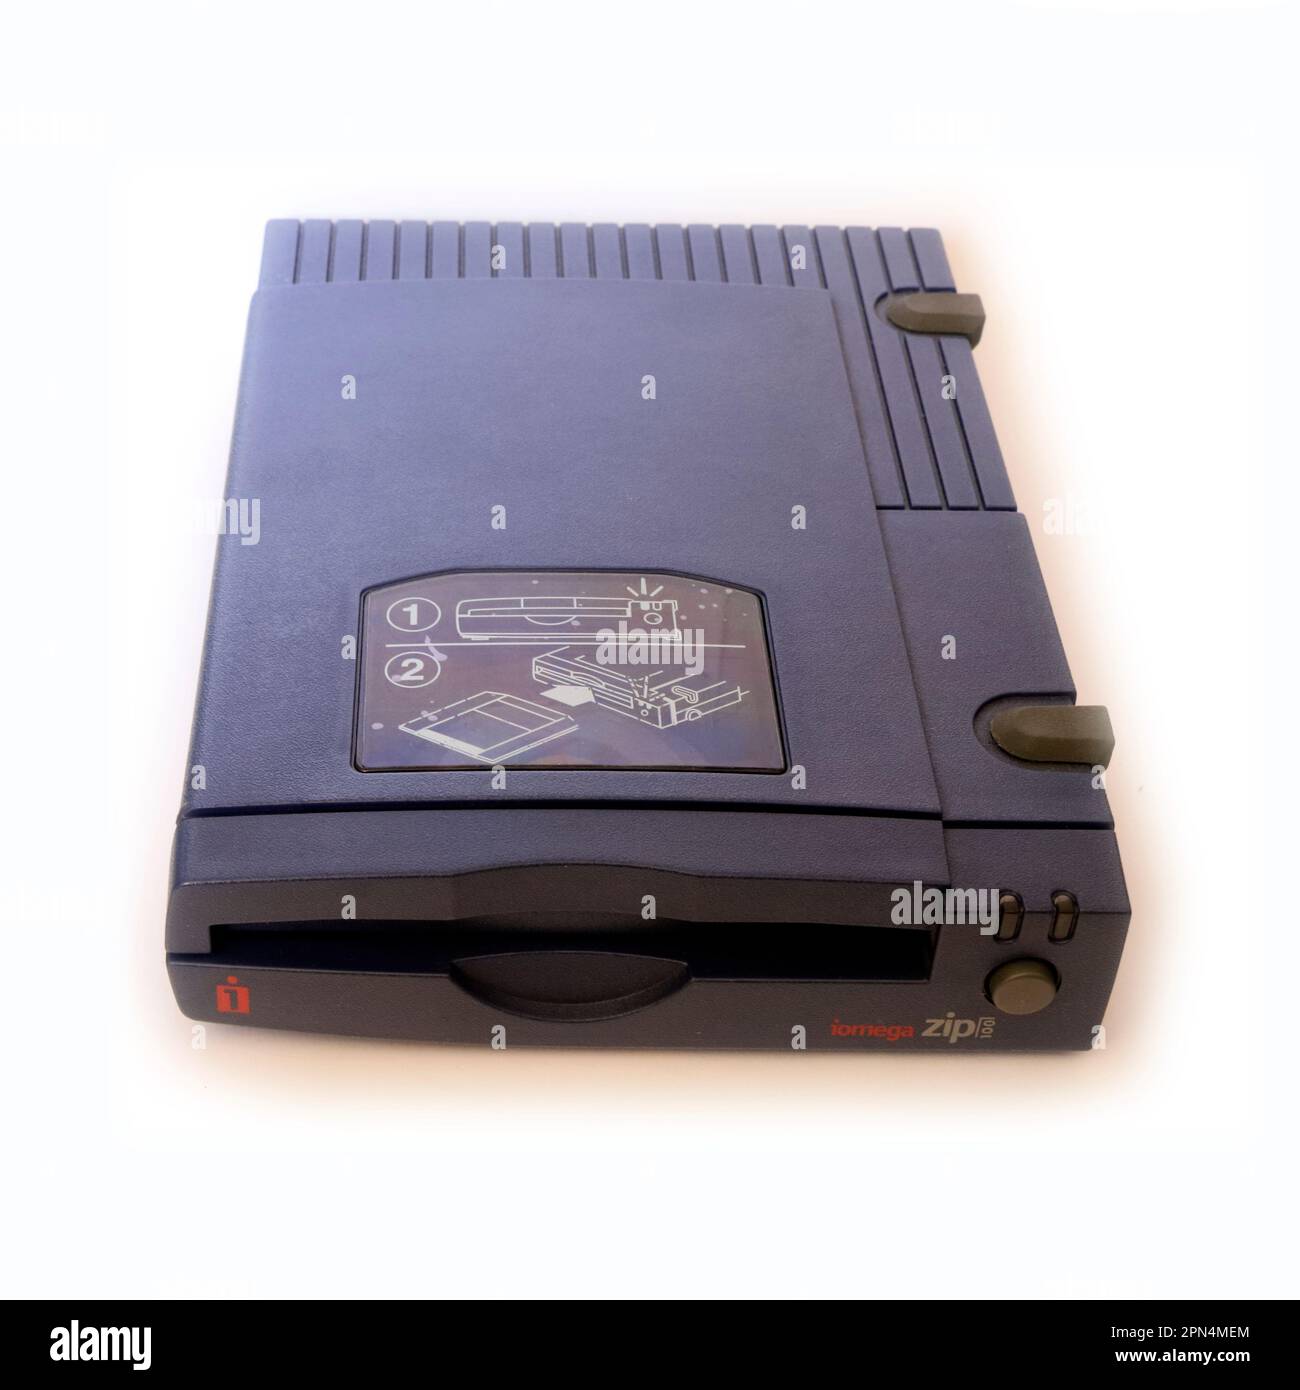 Iomega zip drive. IBM compatible c 1990s vintage Stock Photo